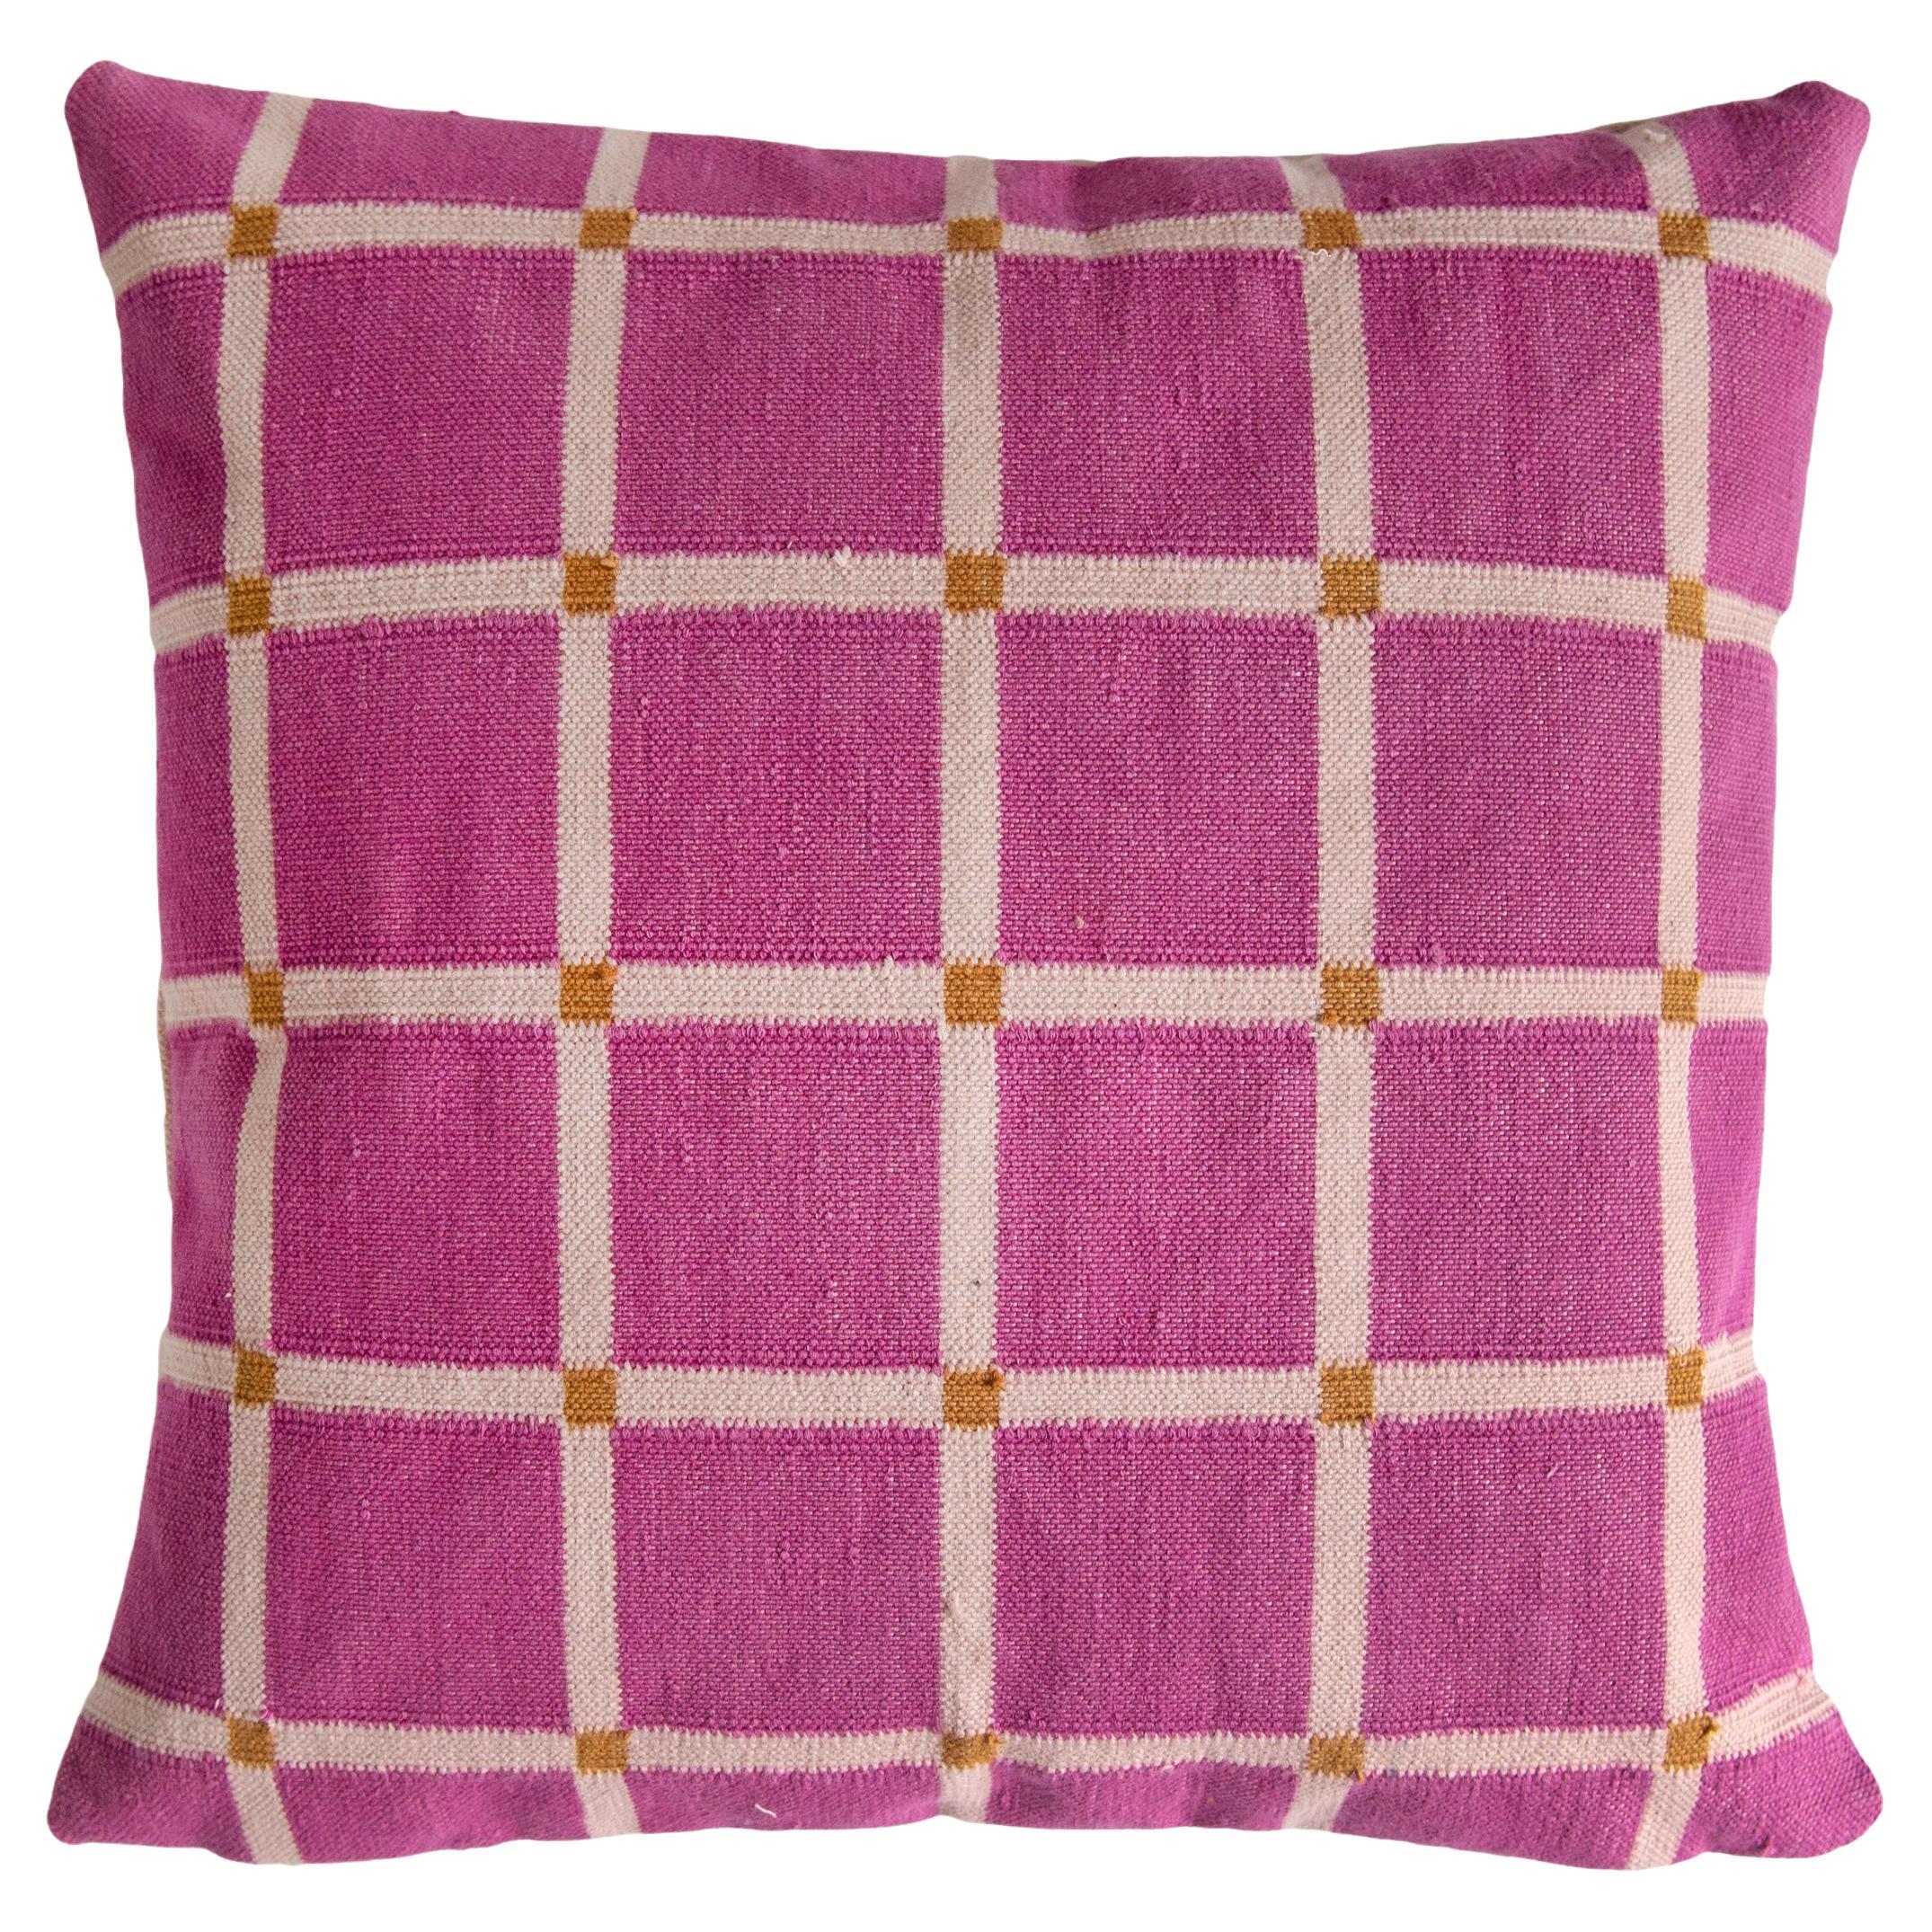 Geometric Grid Pillow, Reversible Pink